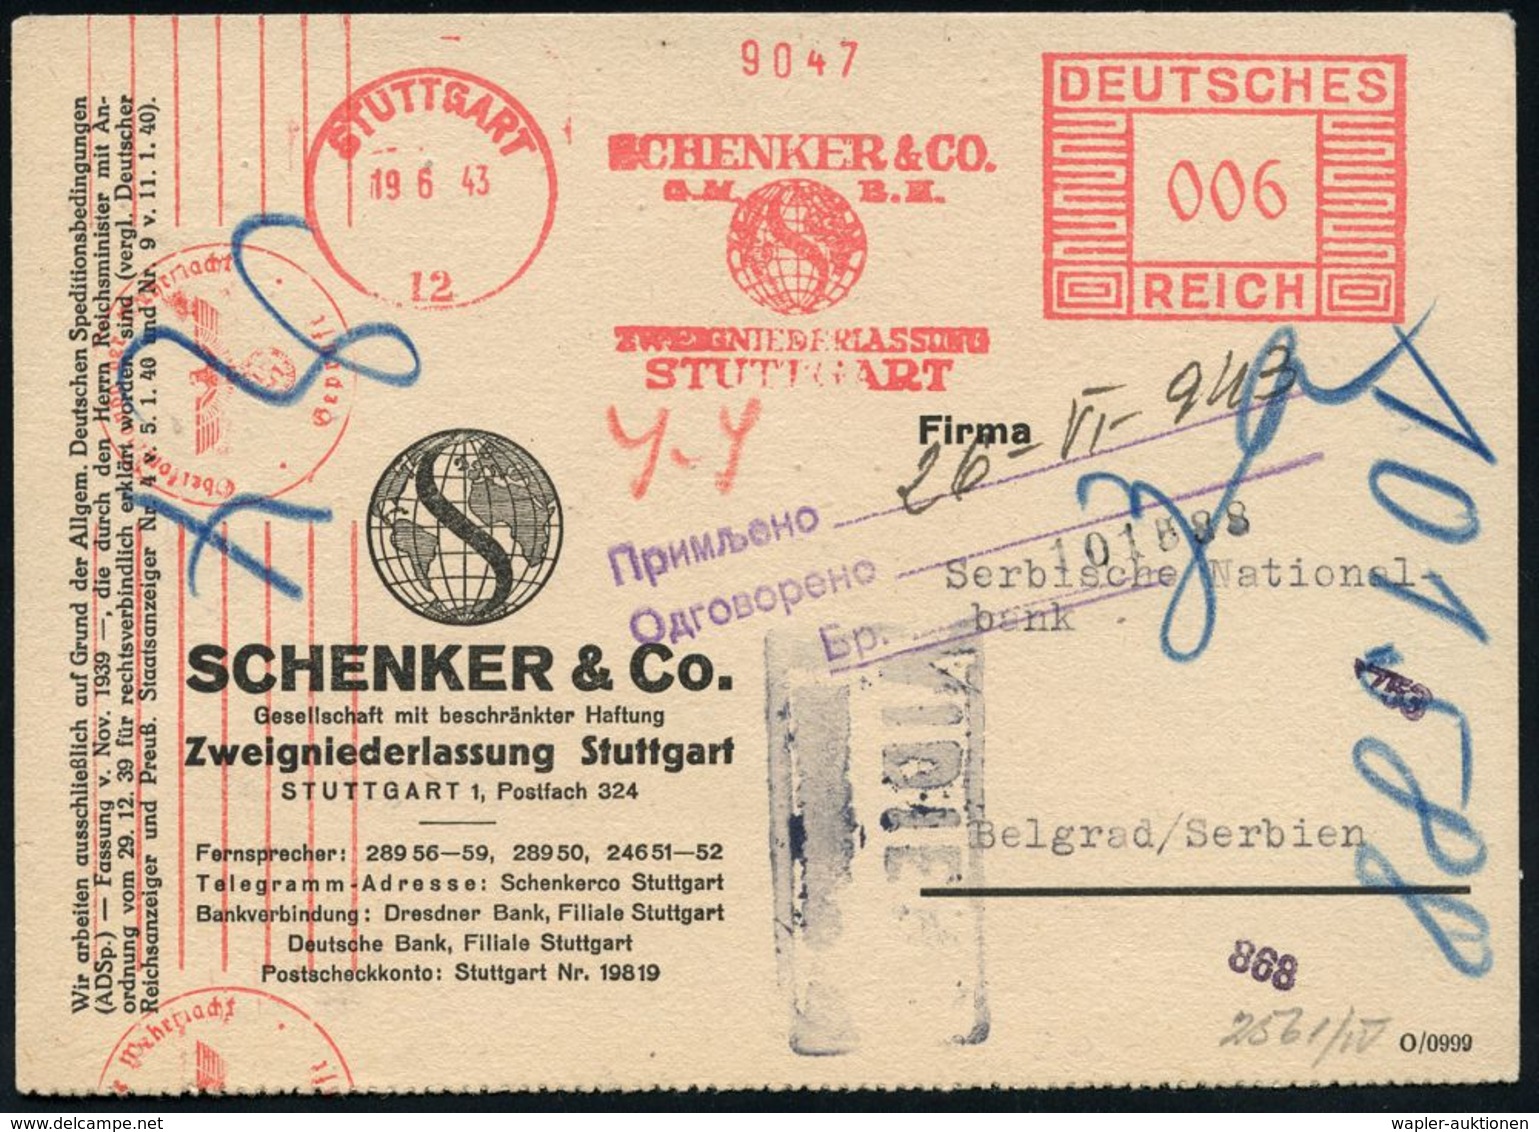 SPEDITION & FRACHT : STUTTGART/ 12/ SCHENKER & CO.. 1943 (19.8.) AFS 006 Pf. (Firmen-Logo: Globus) + Roter OKW-Band-Zens - Voitures